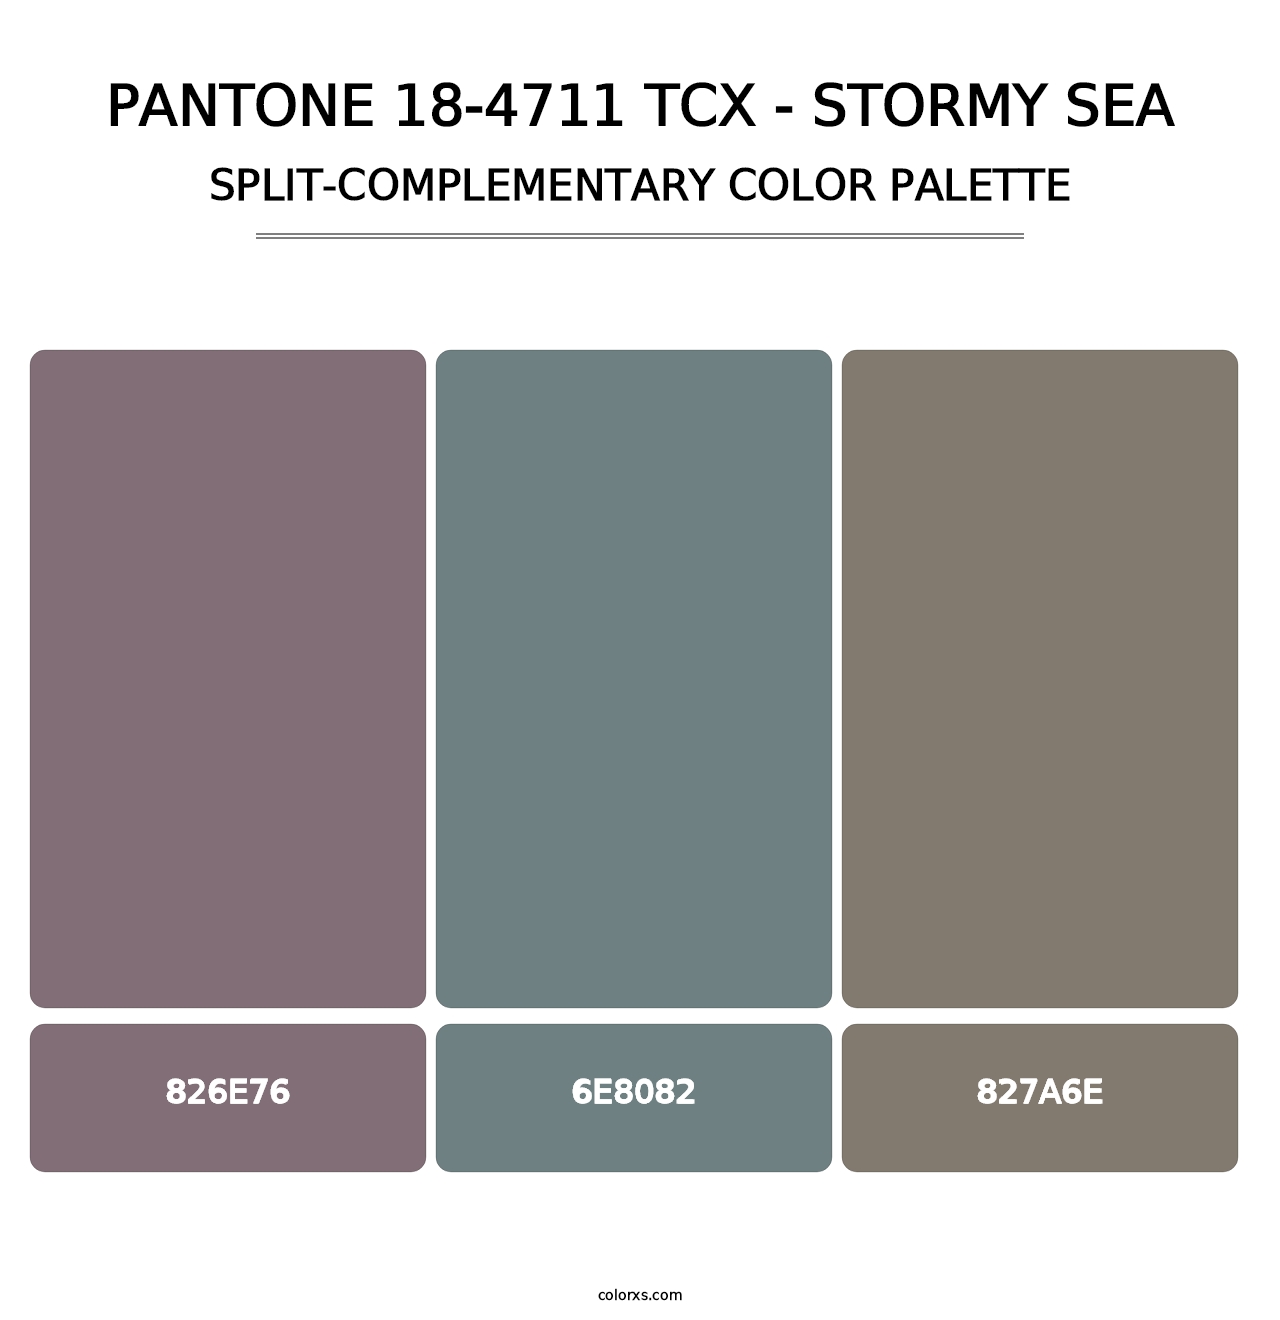 PANTONE 18-4711 TCX - Stormy Sea - Split-Complementary Color Palette